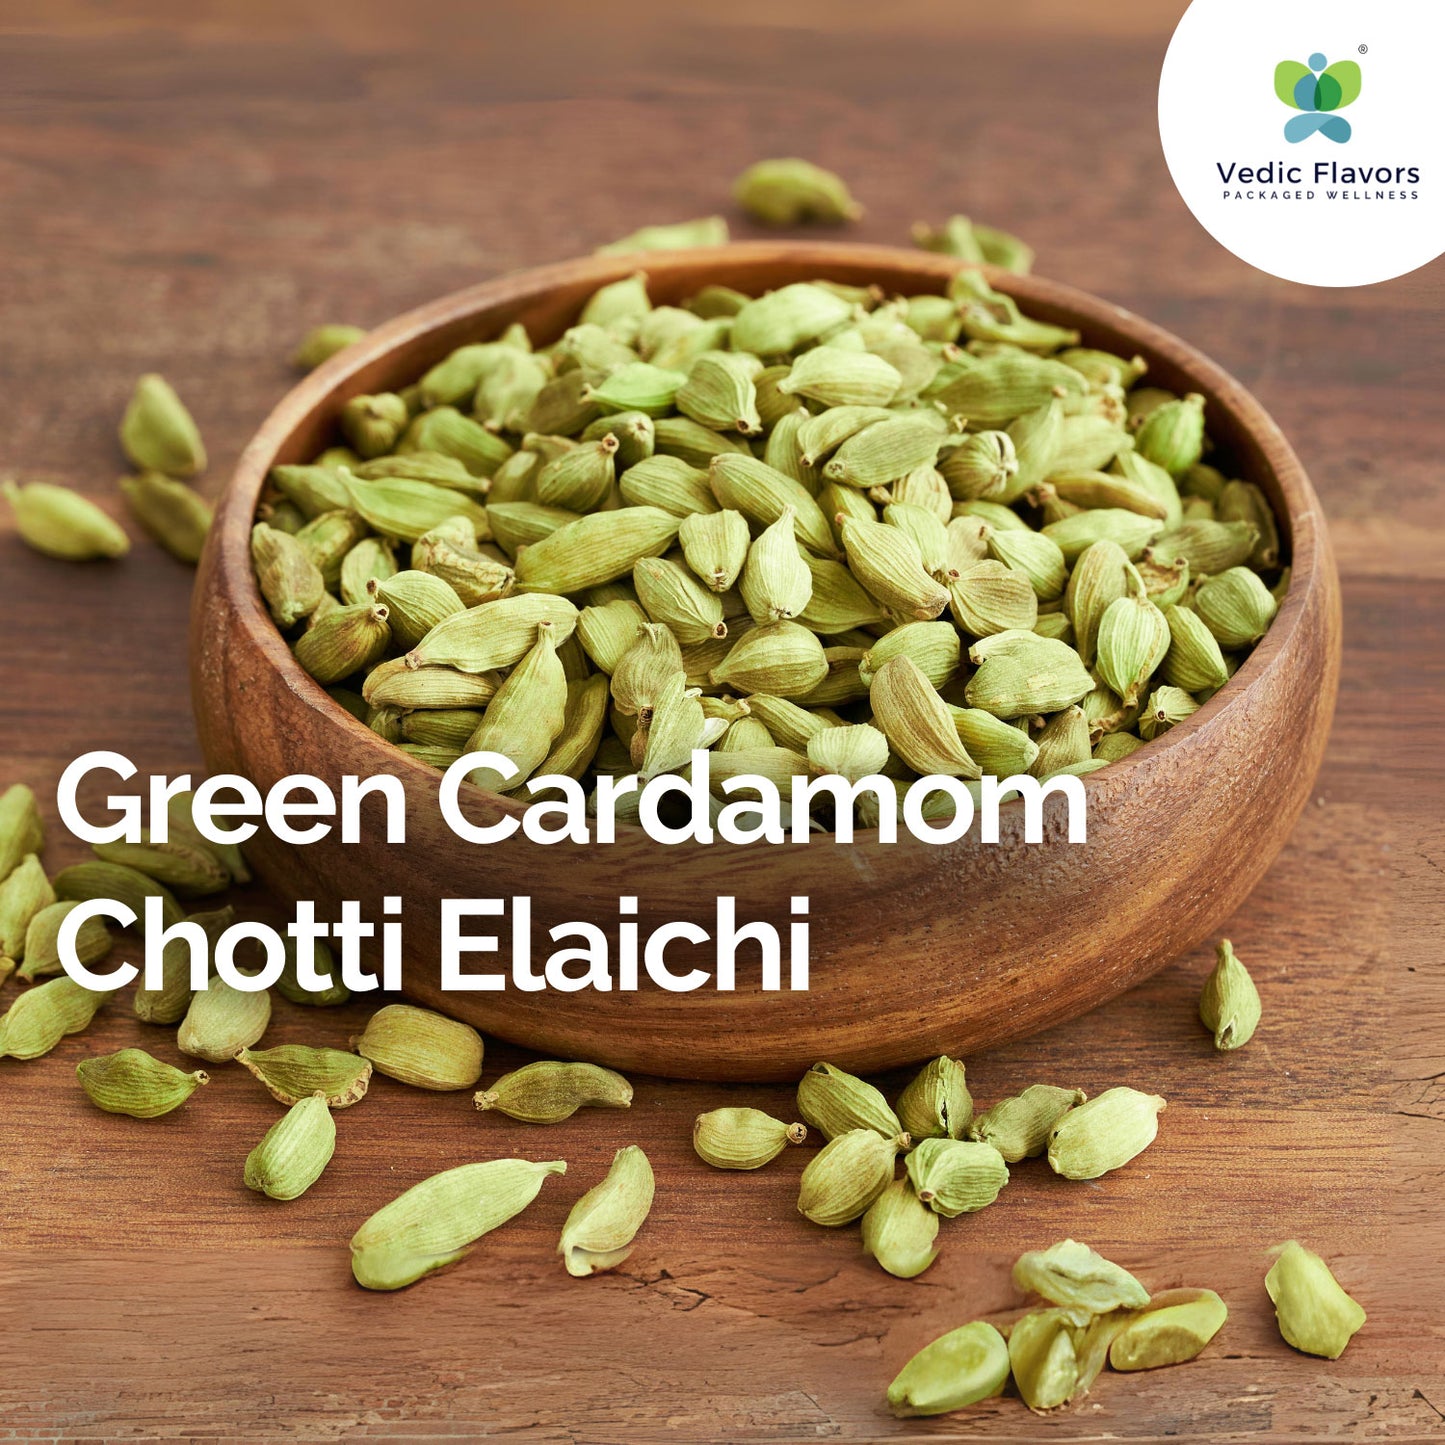 Green Cardamom | Choti Elaichi from Kerala